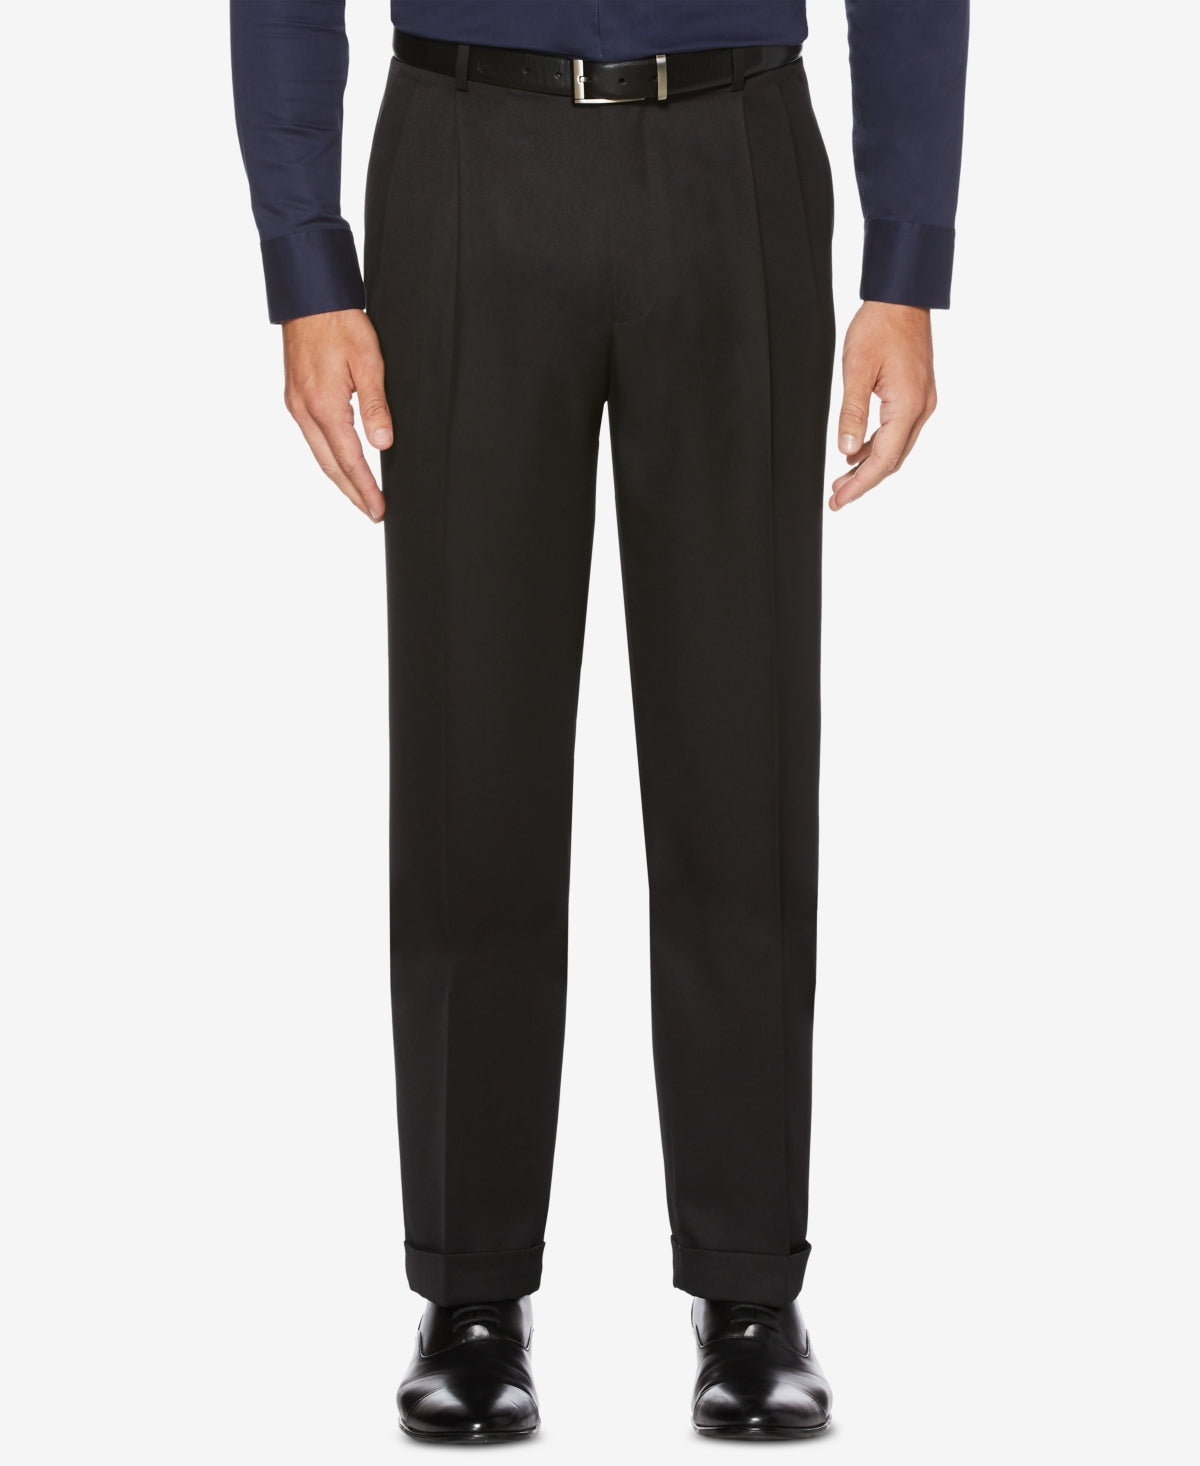 Perry Ellis Portfolio Classic/Regular Fit Elastic Waist Double Pleated Cuffed Dress Pants Black